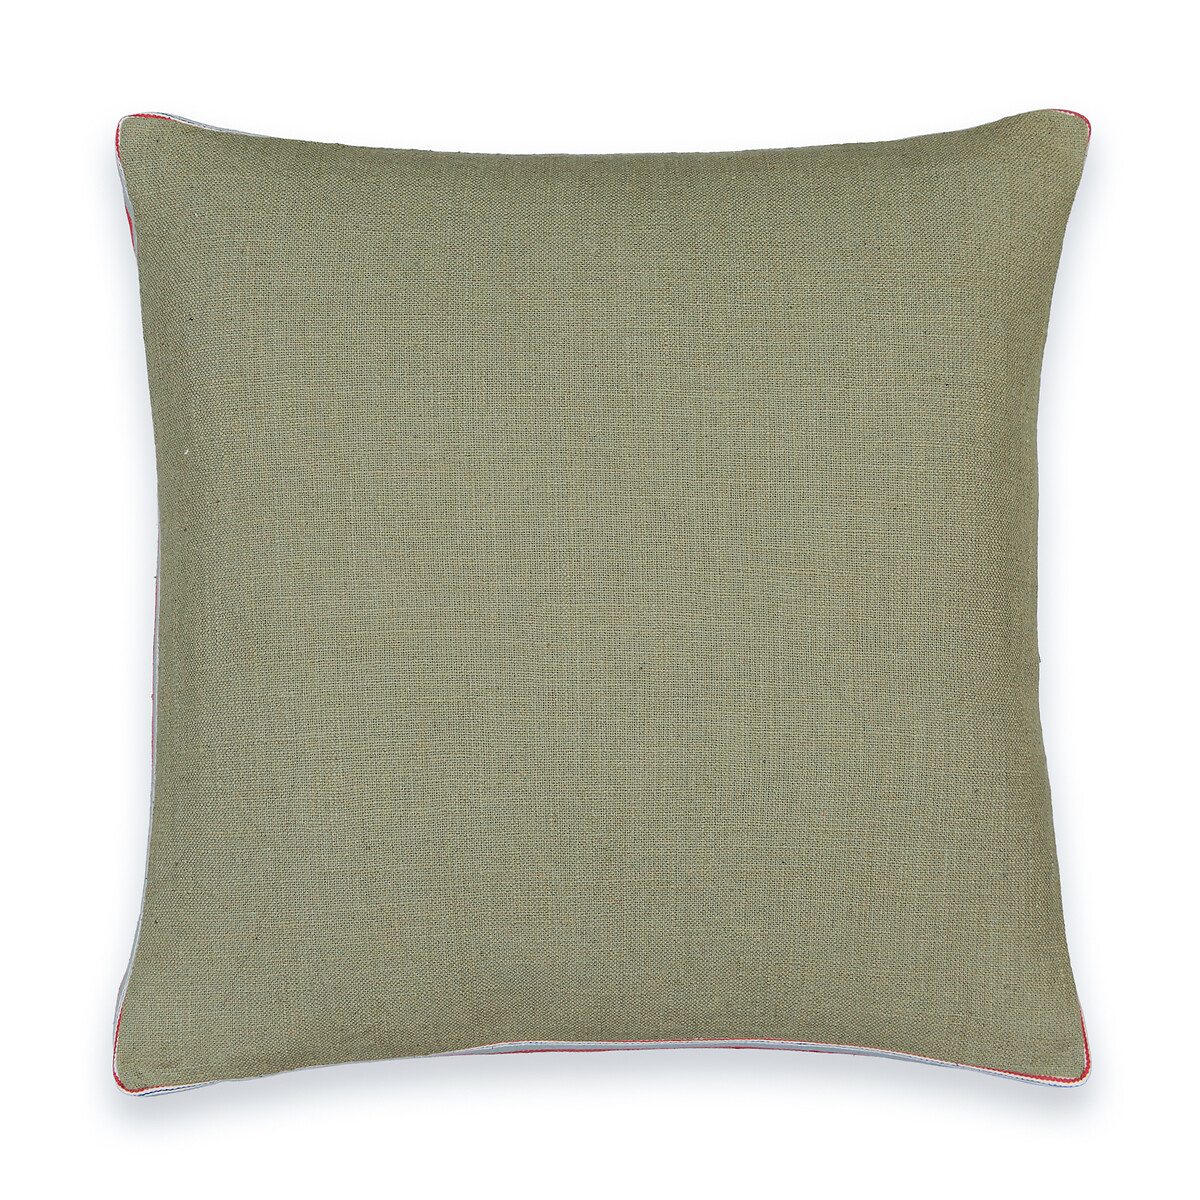 цена Чехол на подушку 40 х 40 см двухцветный Finistre 40 x 40 см зеленый